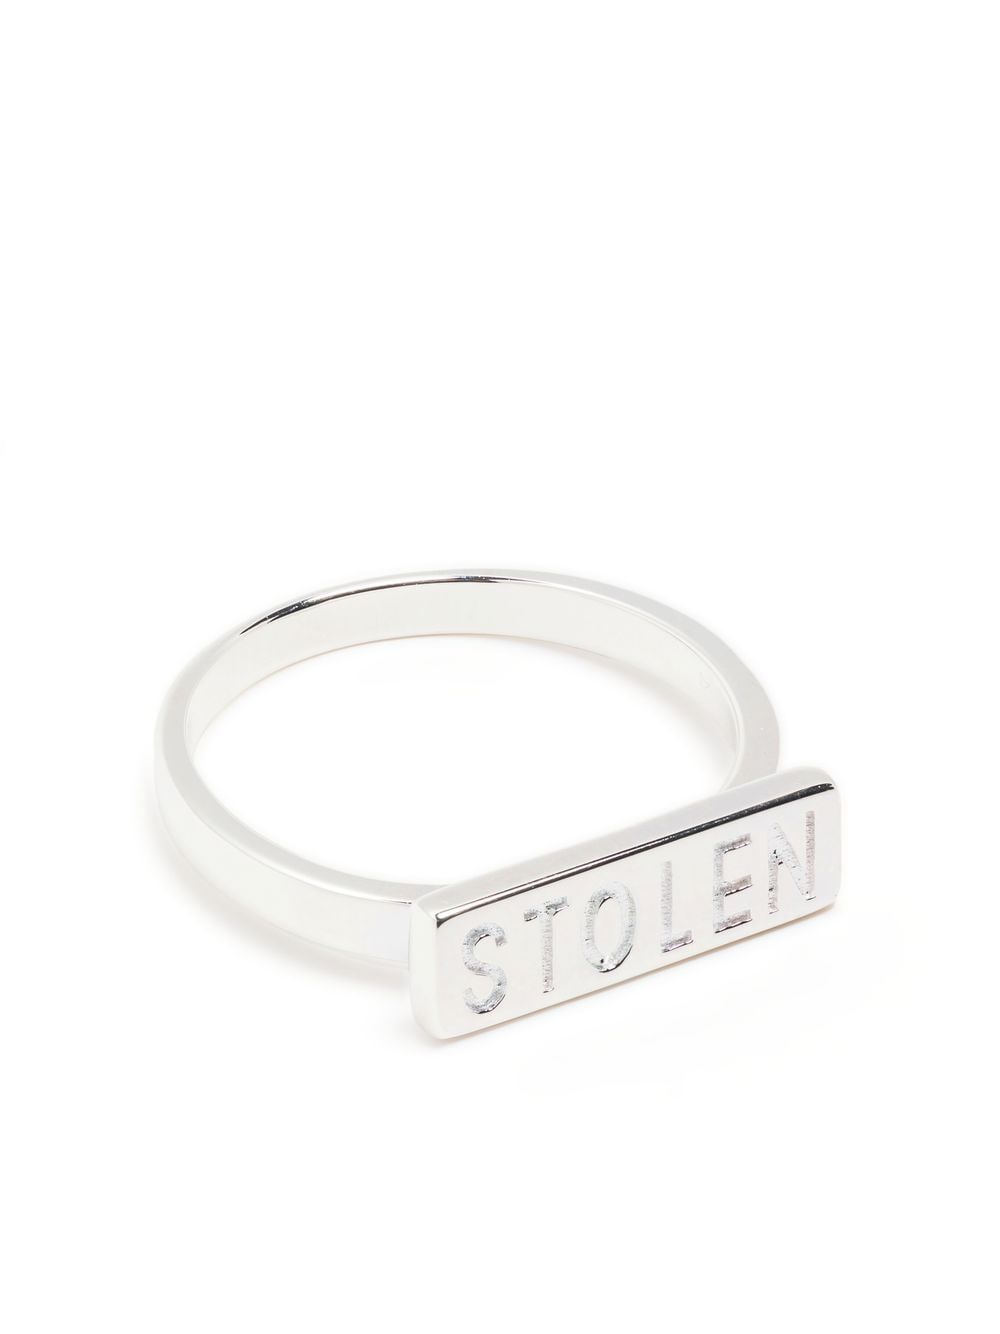 Stolen Bar silver ring